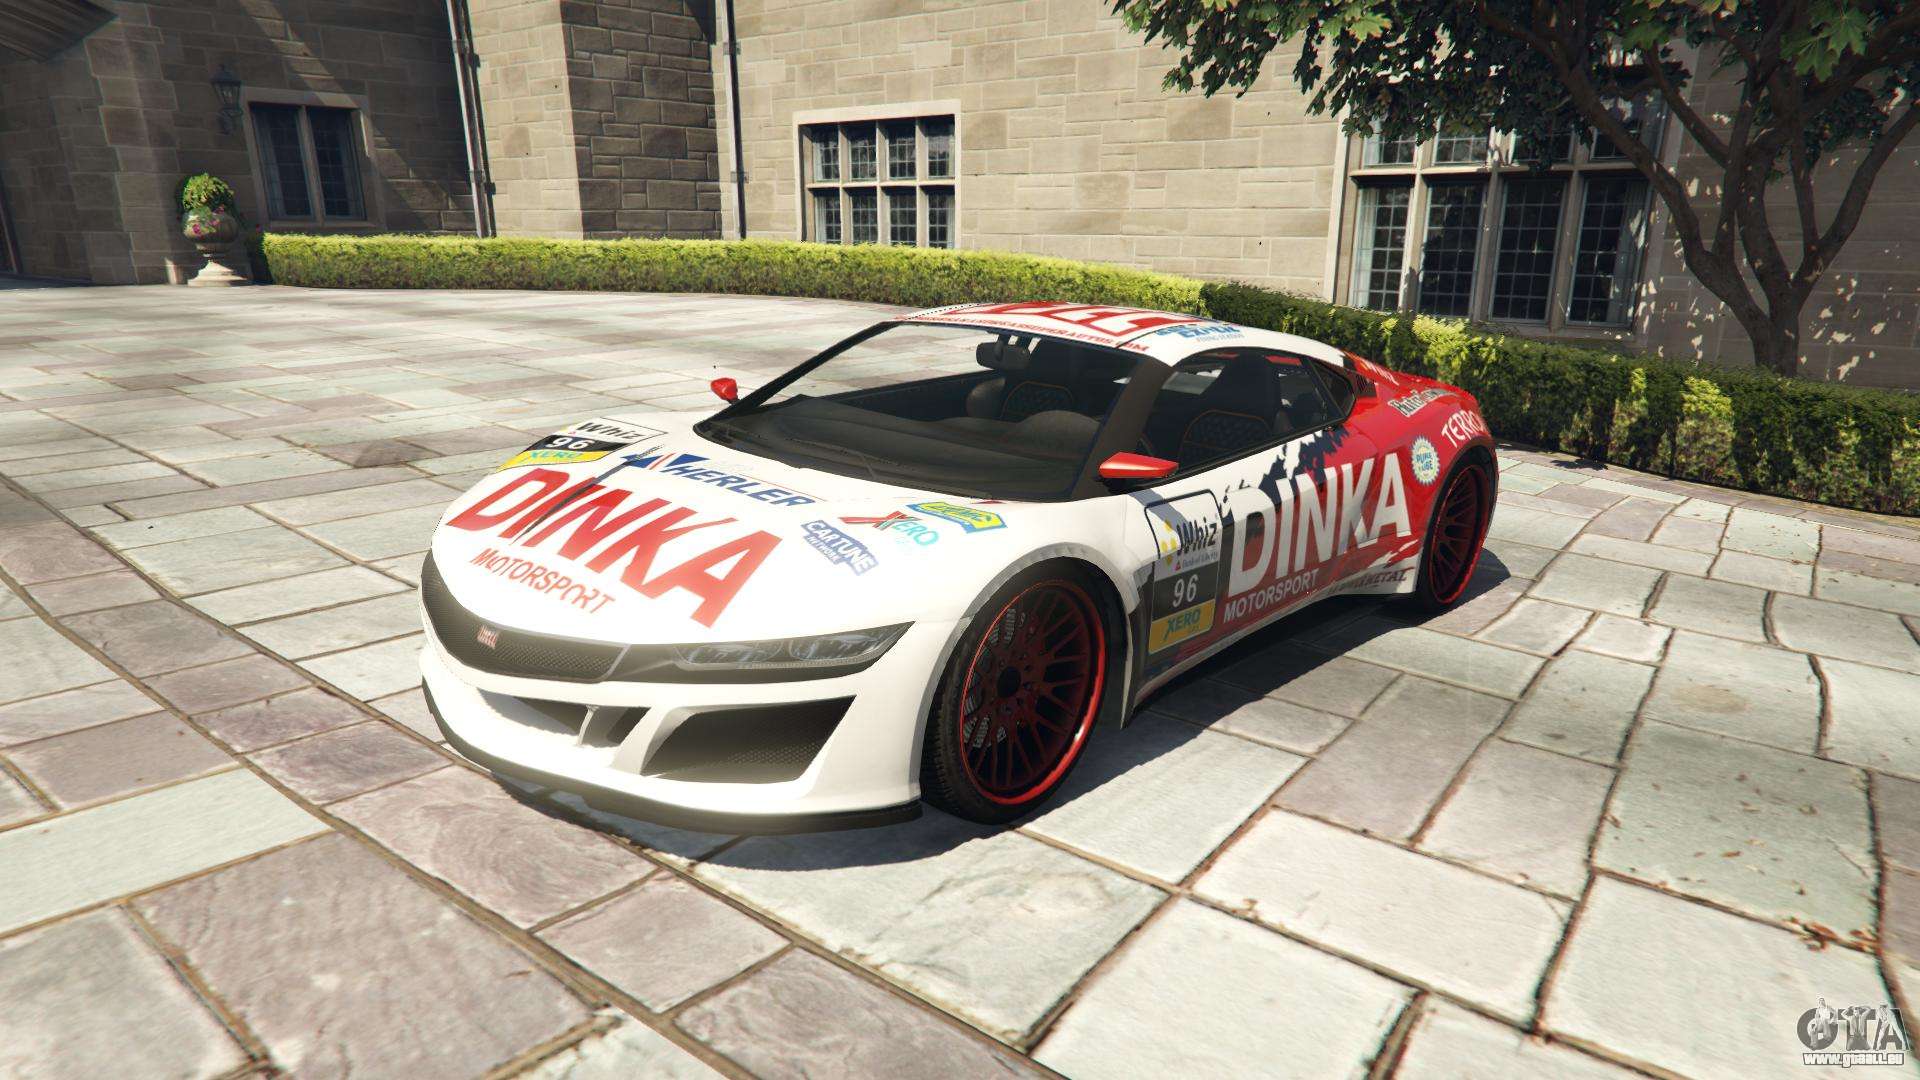 Dinka Jester Racecar aus GTA 5 - Frontansicht